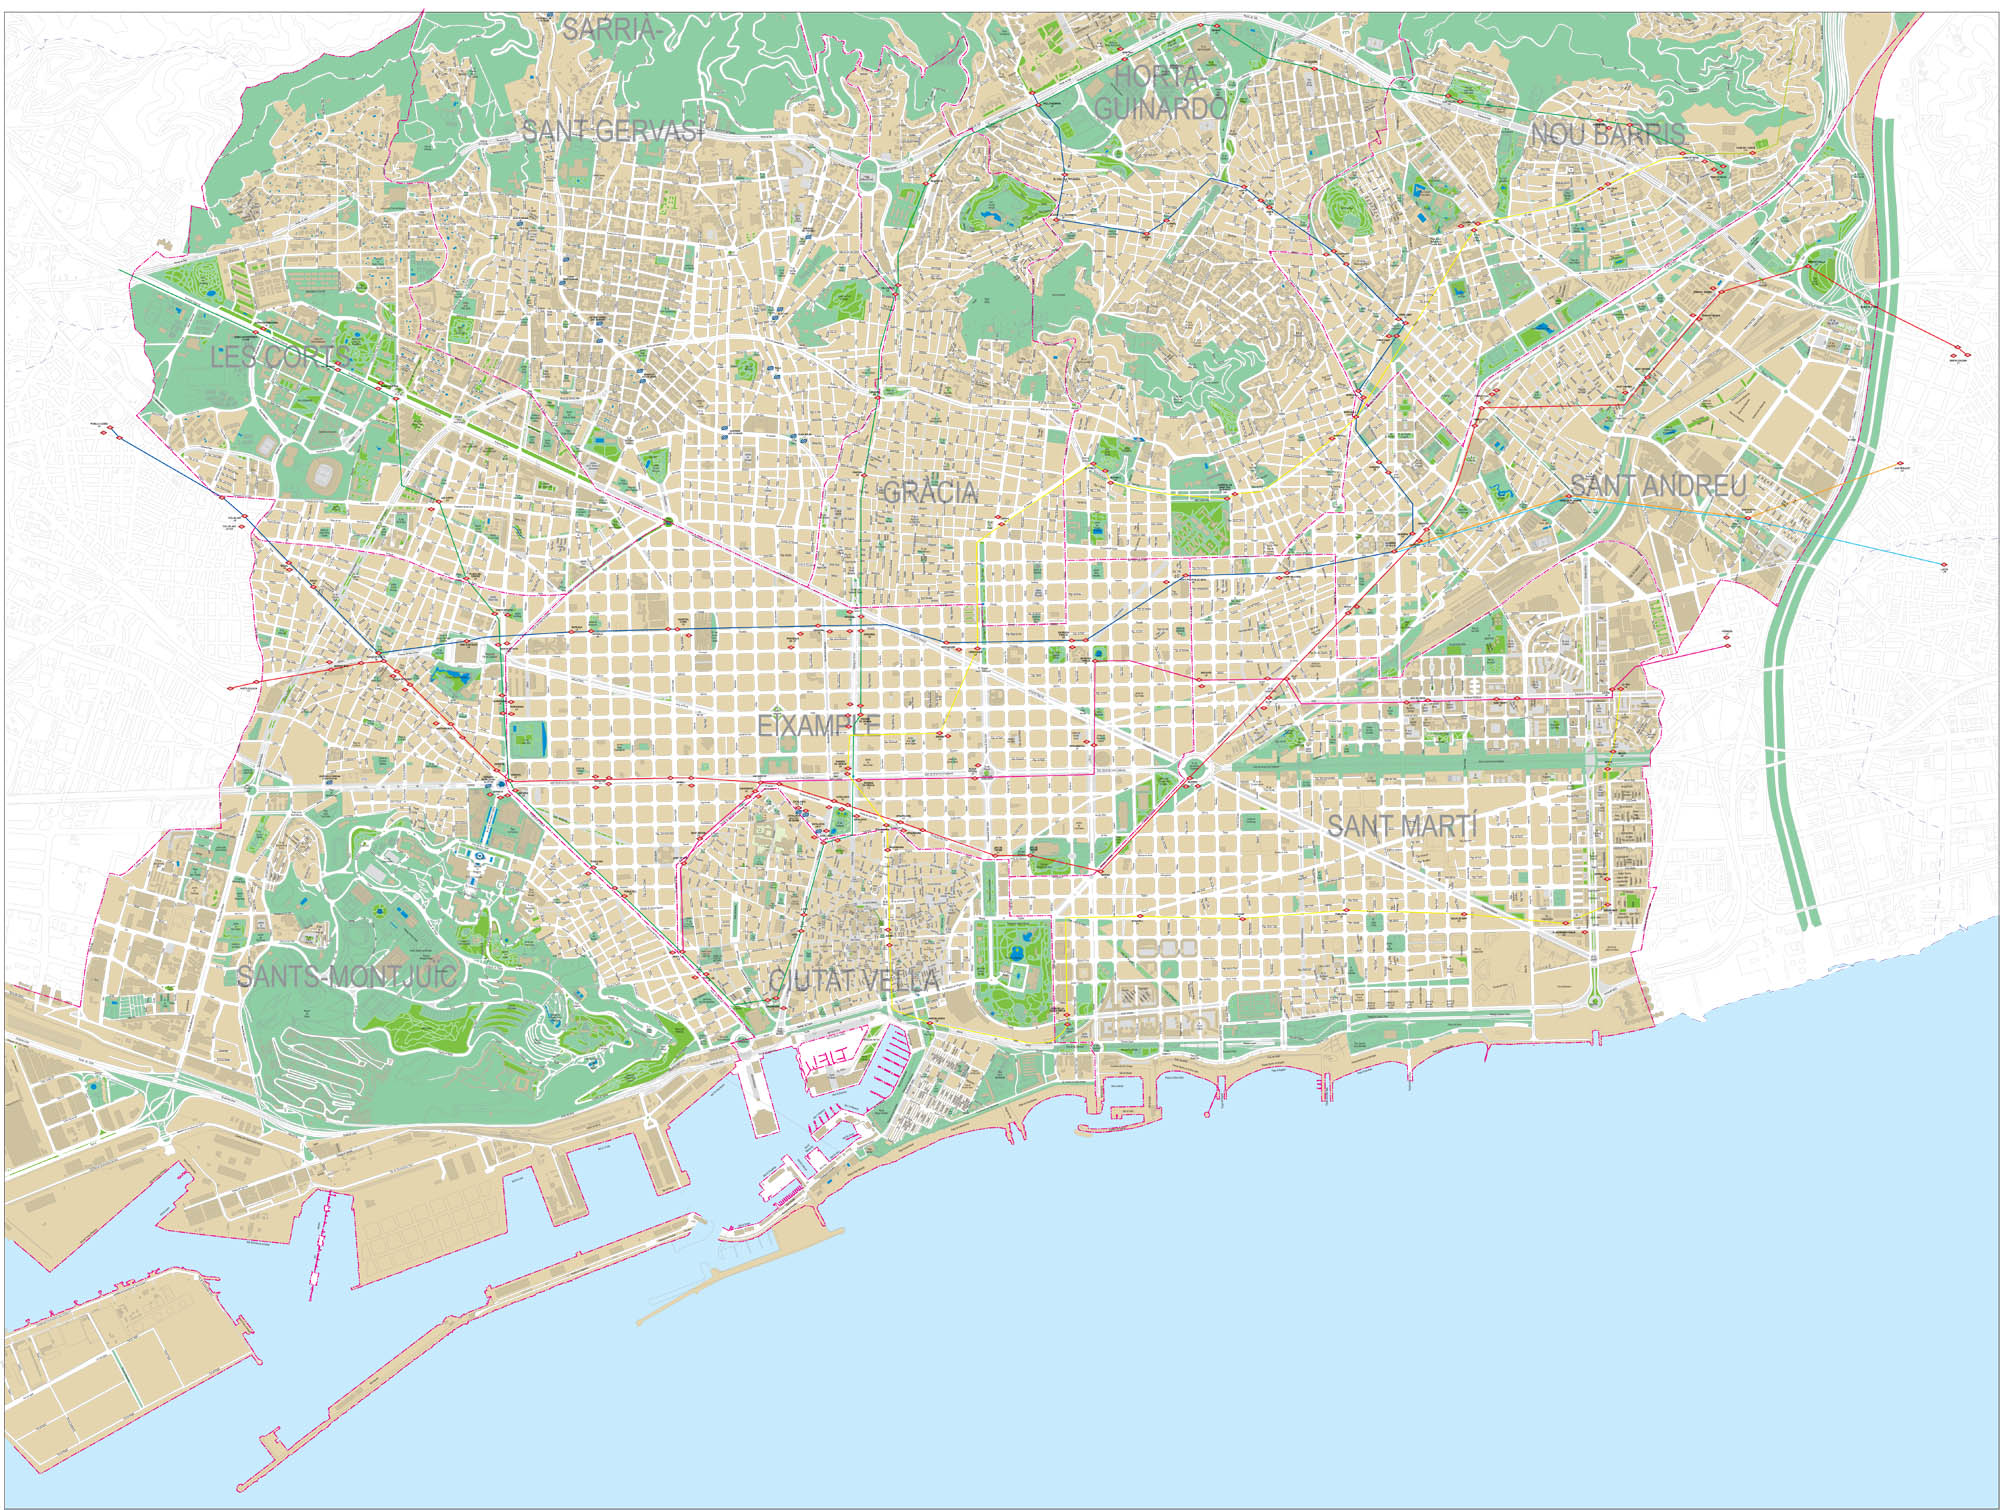 Barcelona City map